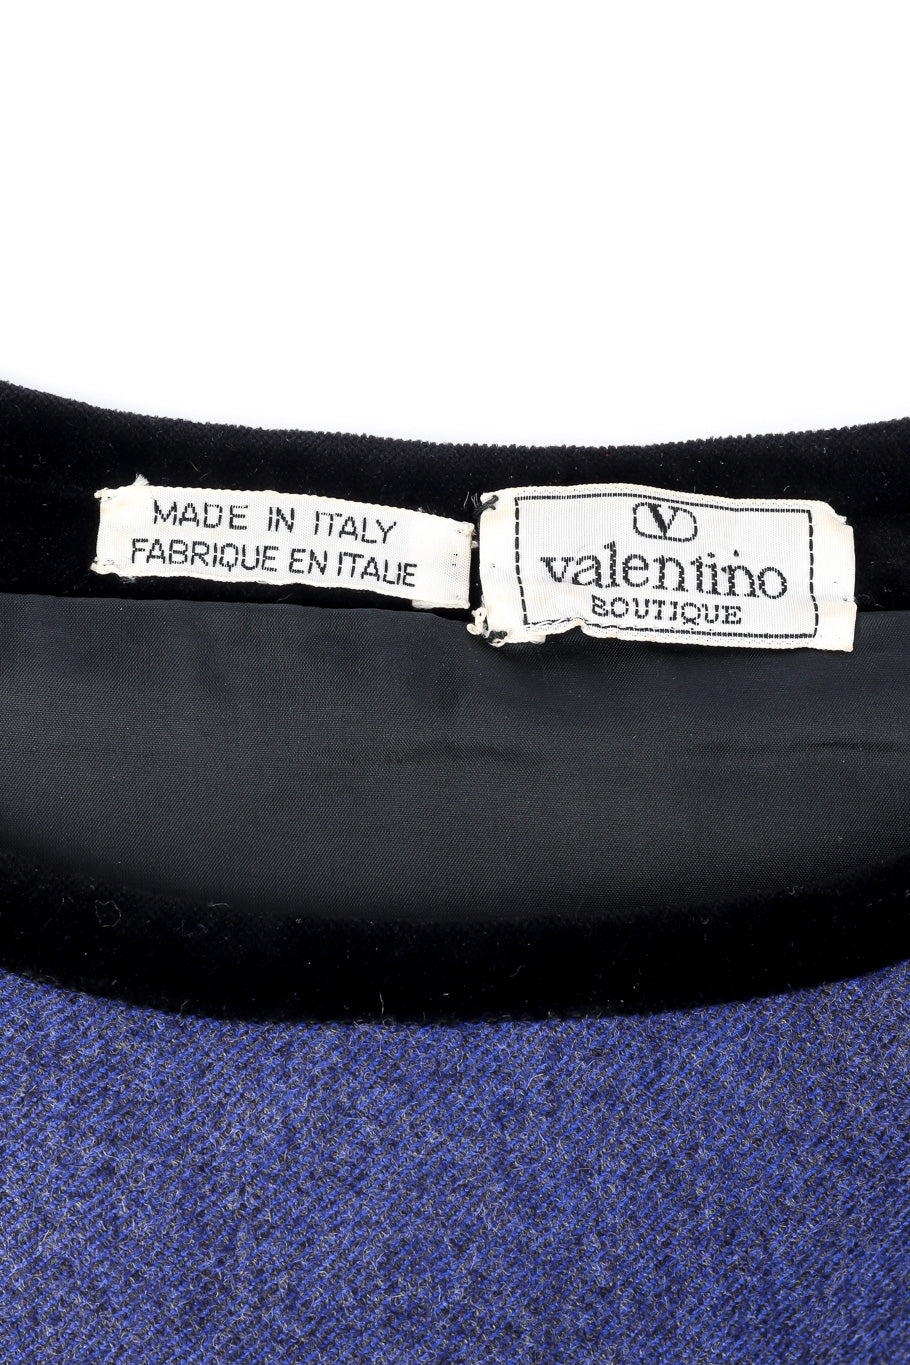 Valentino Boutique cotton denim top and skirt set designer label on top @recessla